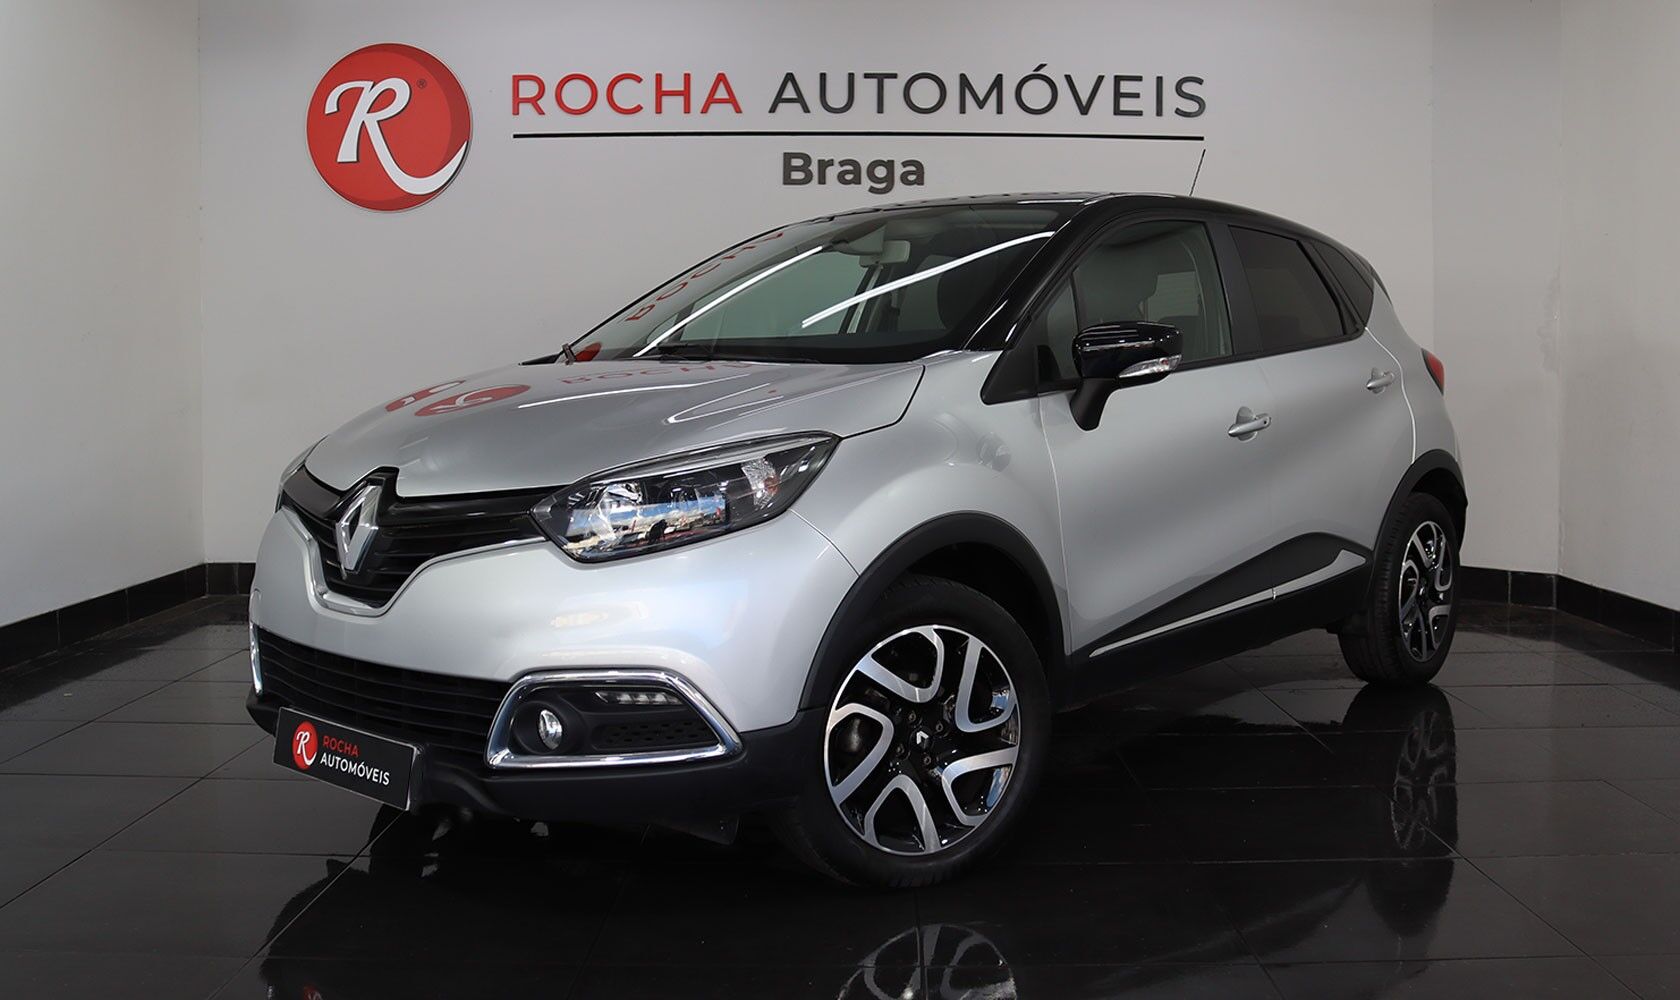 Renault Captur 0.9 TCE Exclusive com 36 695 km por 13 990 € Rocha Automóveis - Braga | Braga